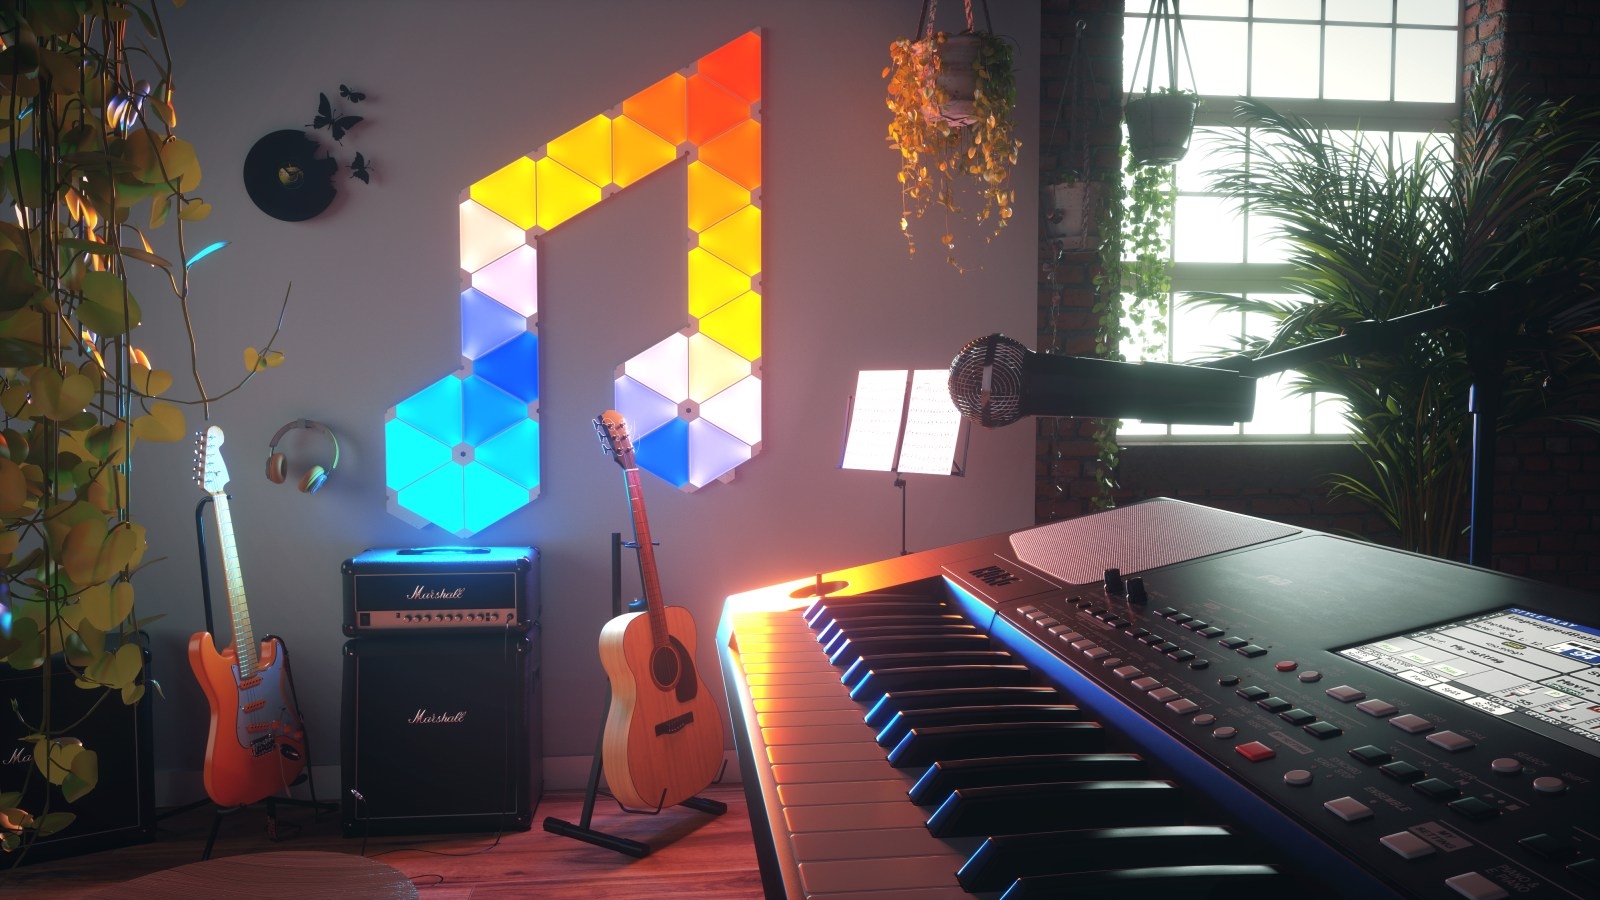 Nanoleaf delivers music syncing for its Aurora smart lights | DeviceDaily.com